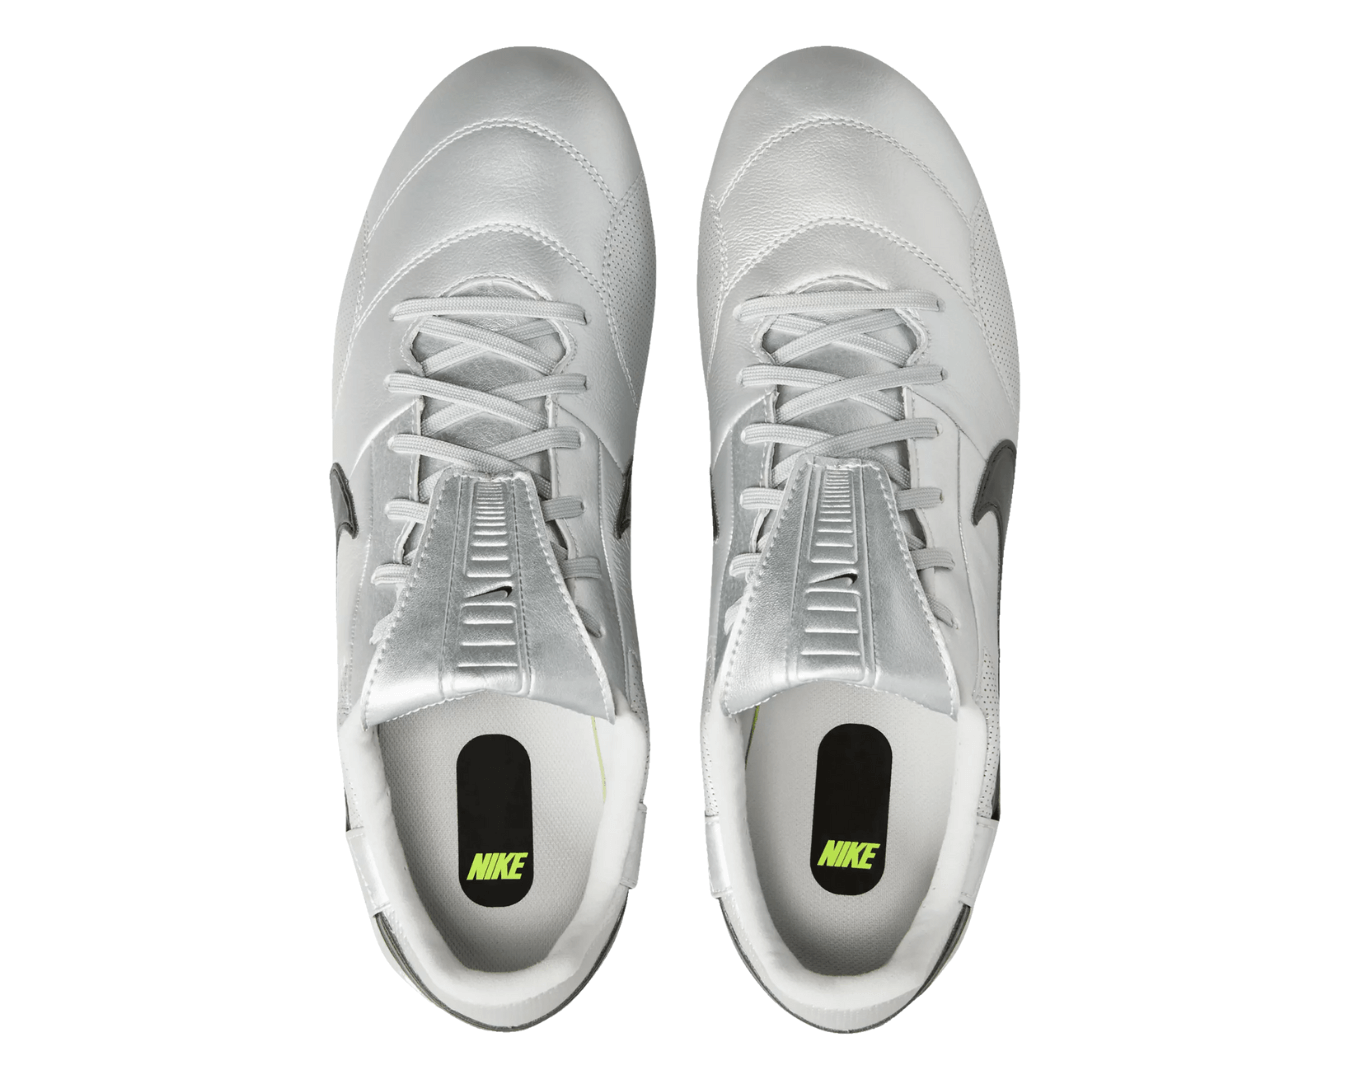 The Nike Premier III TF